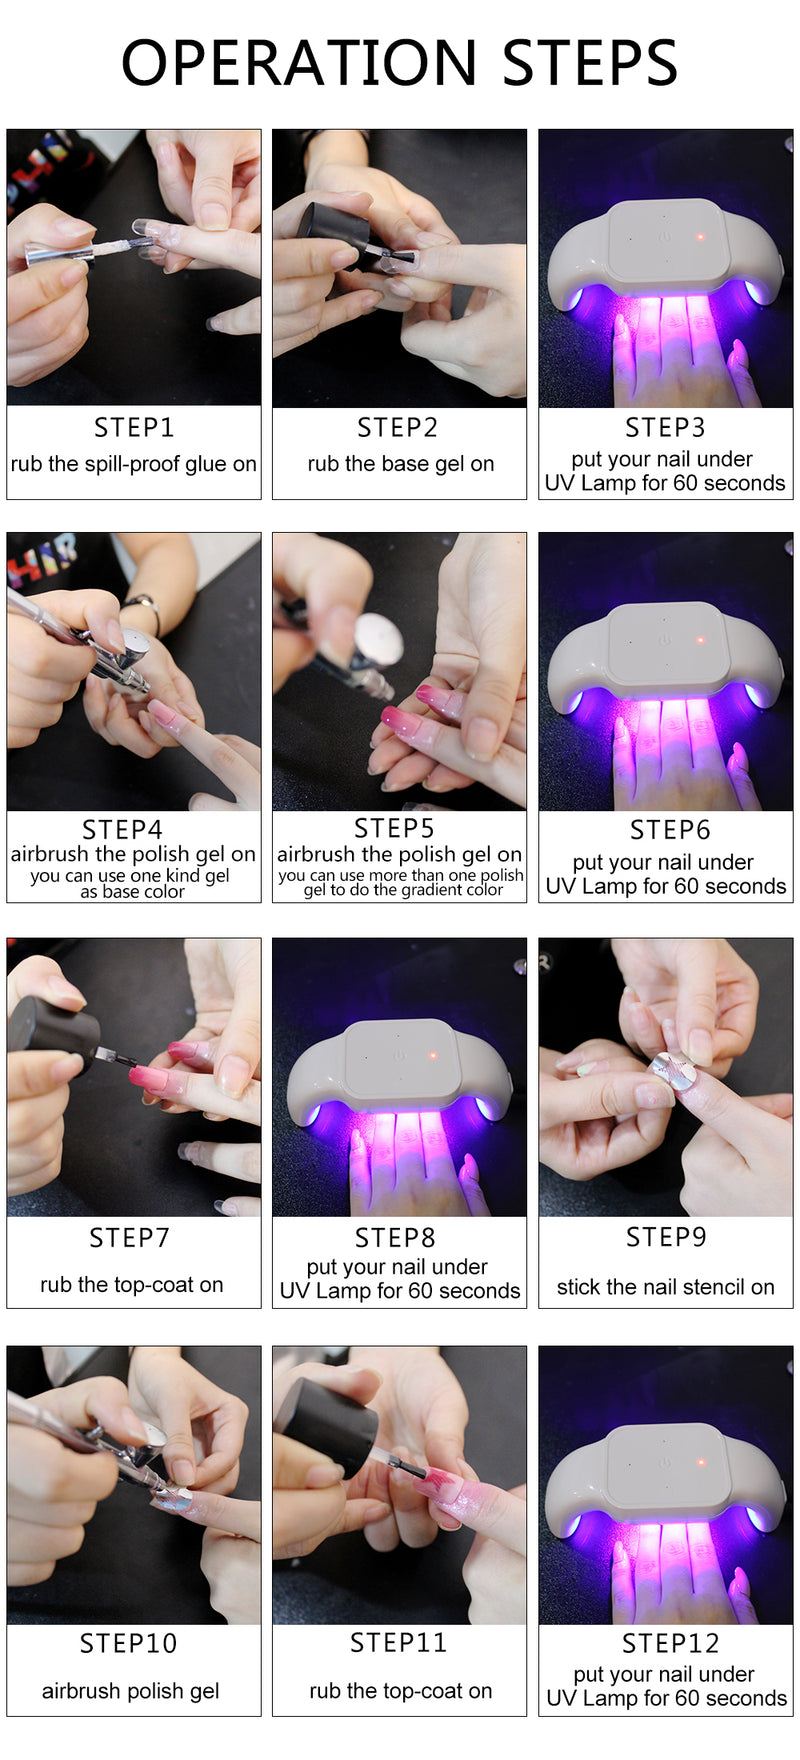 OPHIR Airbrush Nail Polish Gel 3 Step Quality Nail Gel for Nail Stencil Airbrush Nail Art Manicure